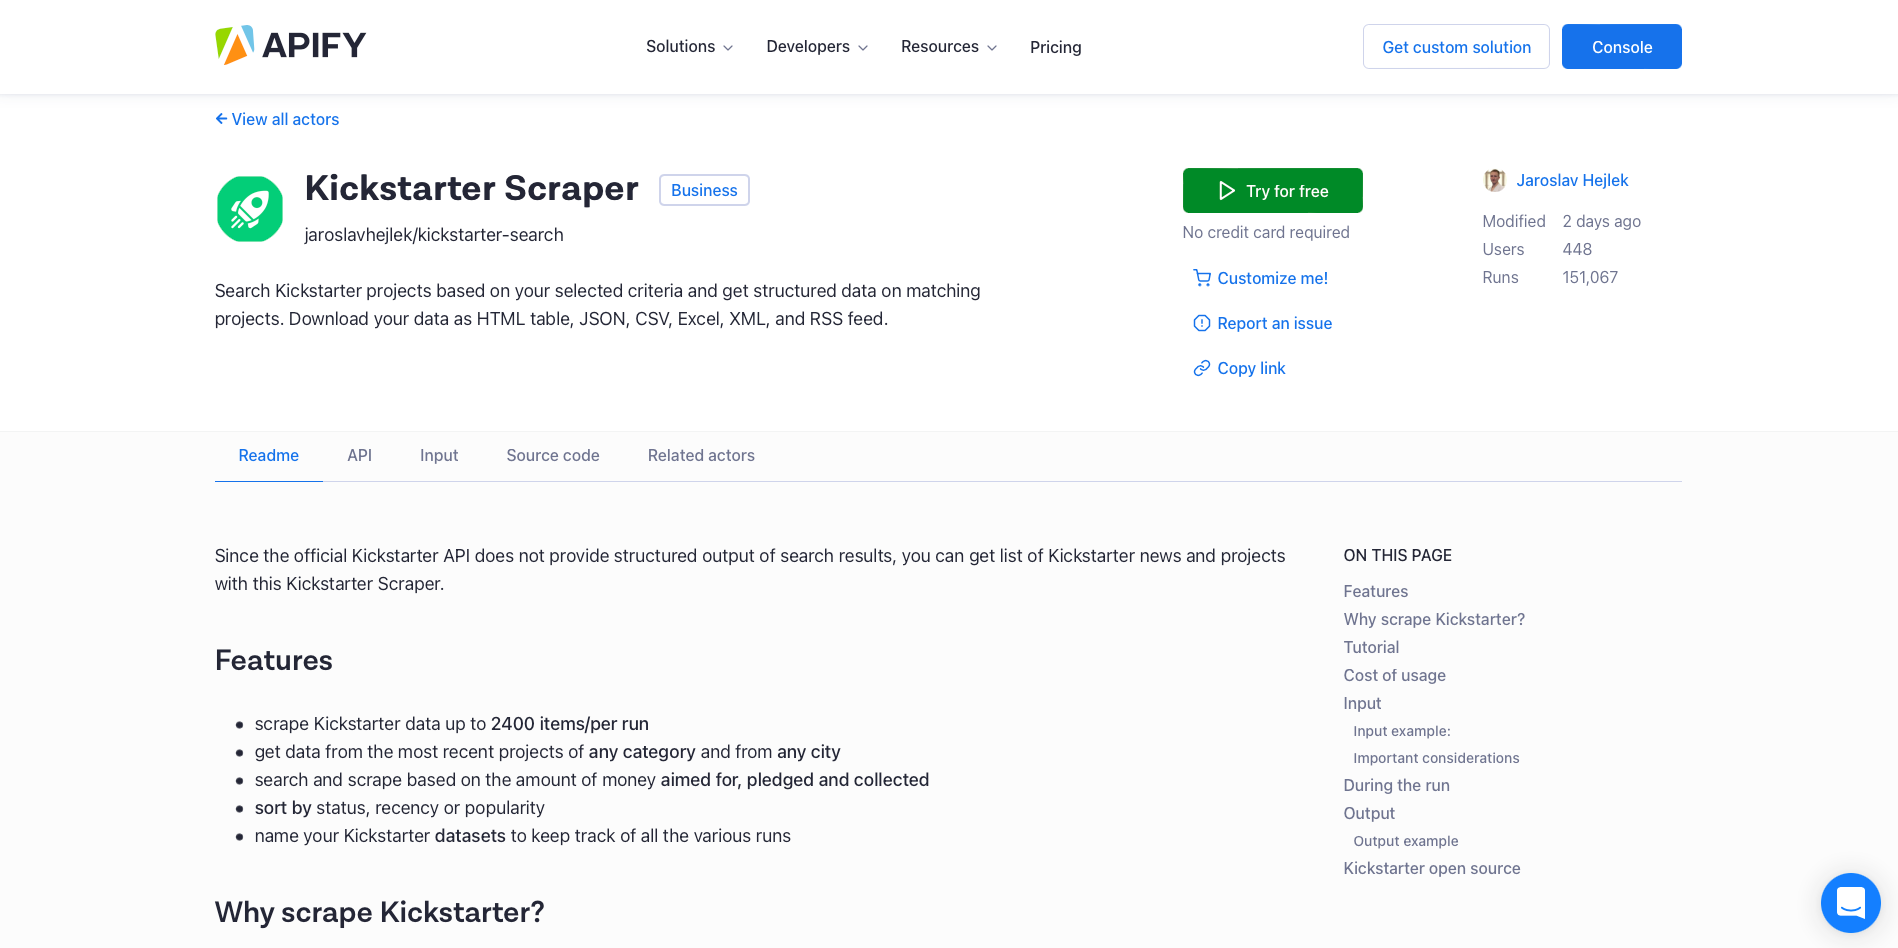 The Kickstarter scraper's page on Apify Store